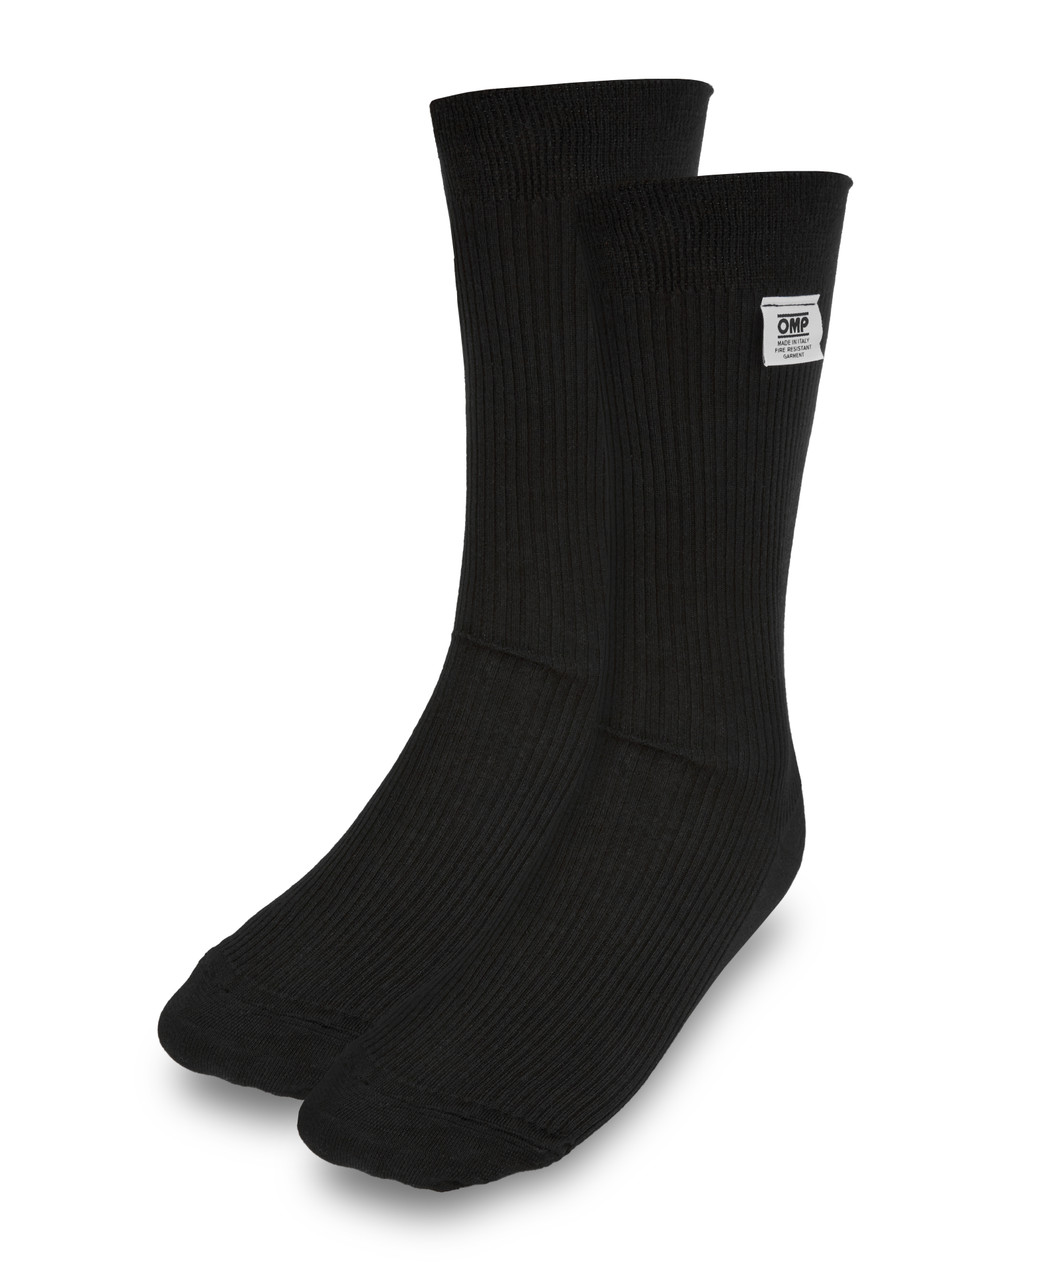 OMP Racing Socks Black Nomex Size Small FIA - OMPIE0-0762-A01-071-S